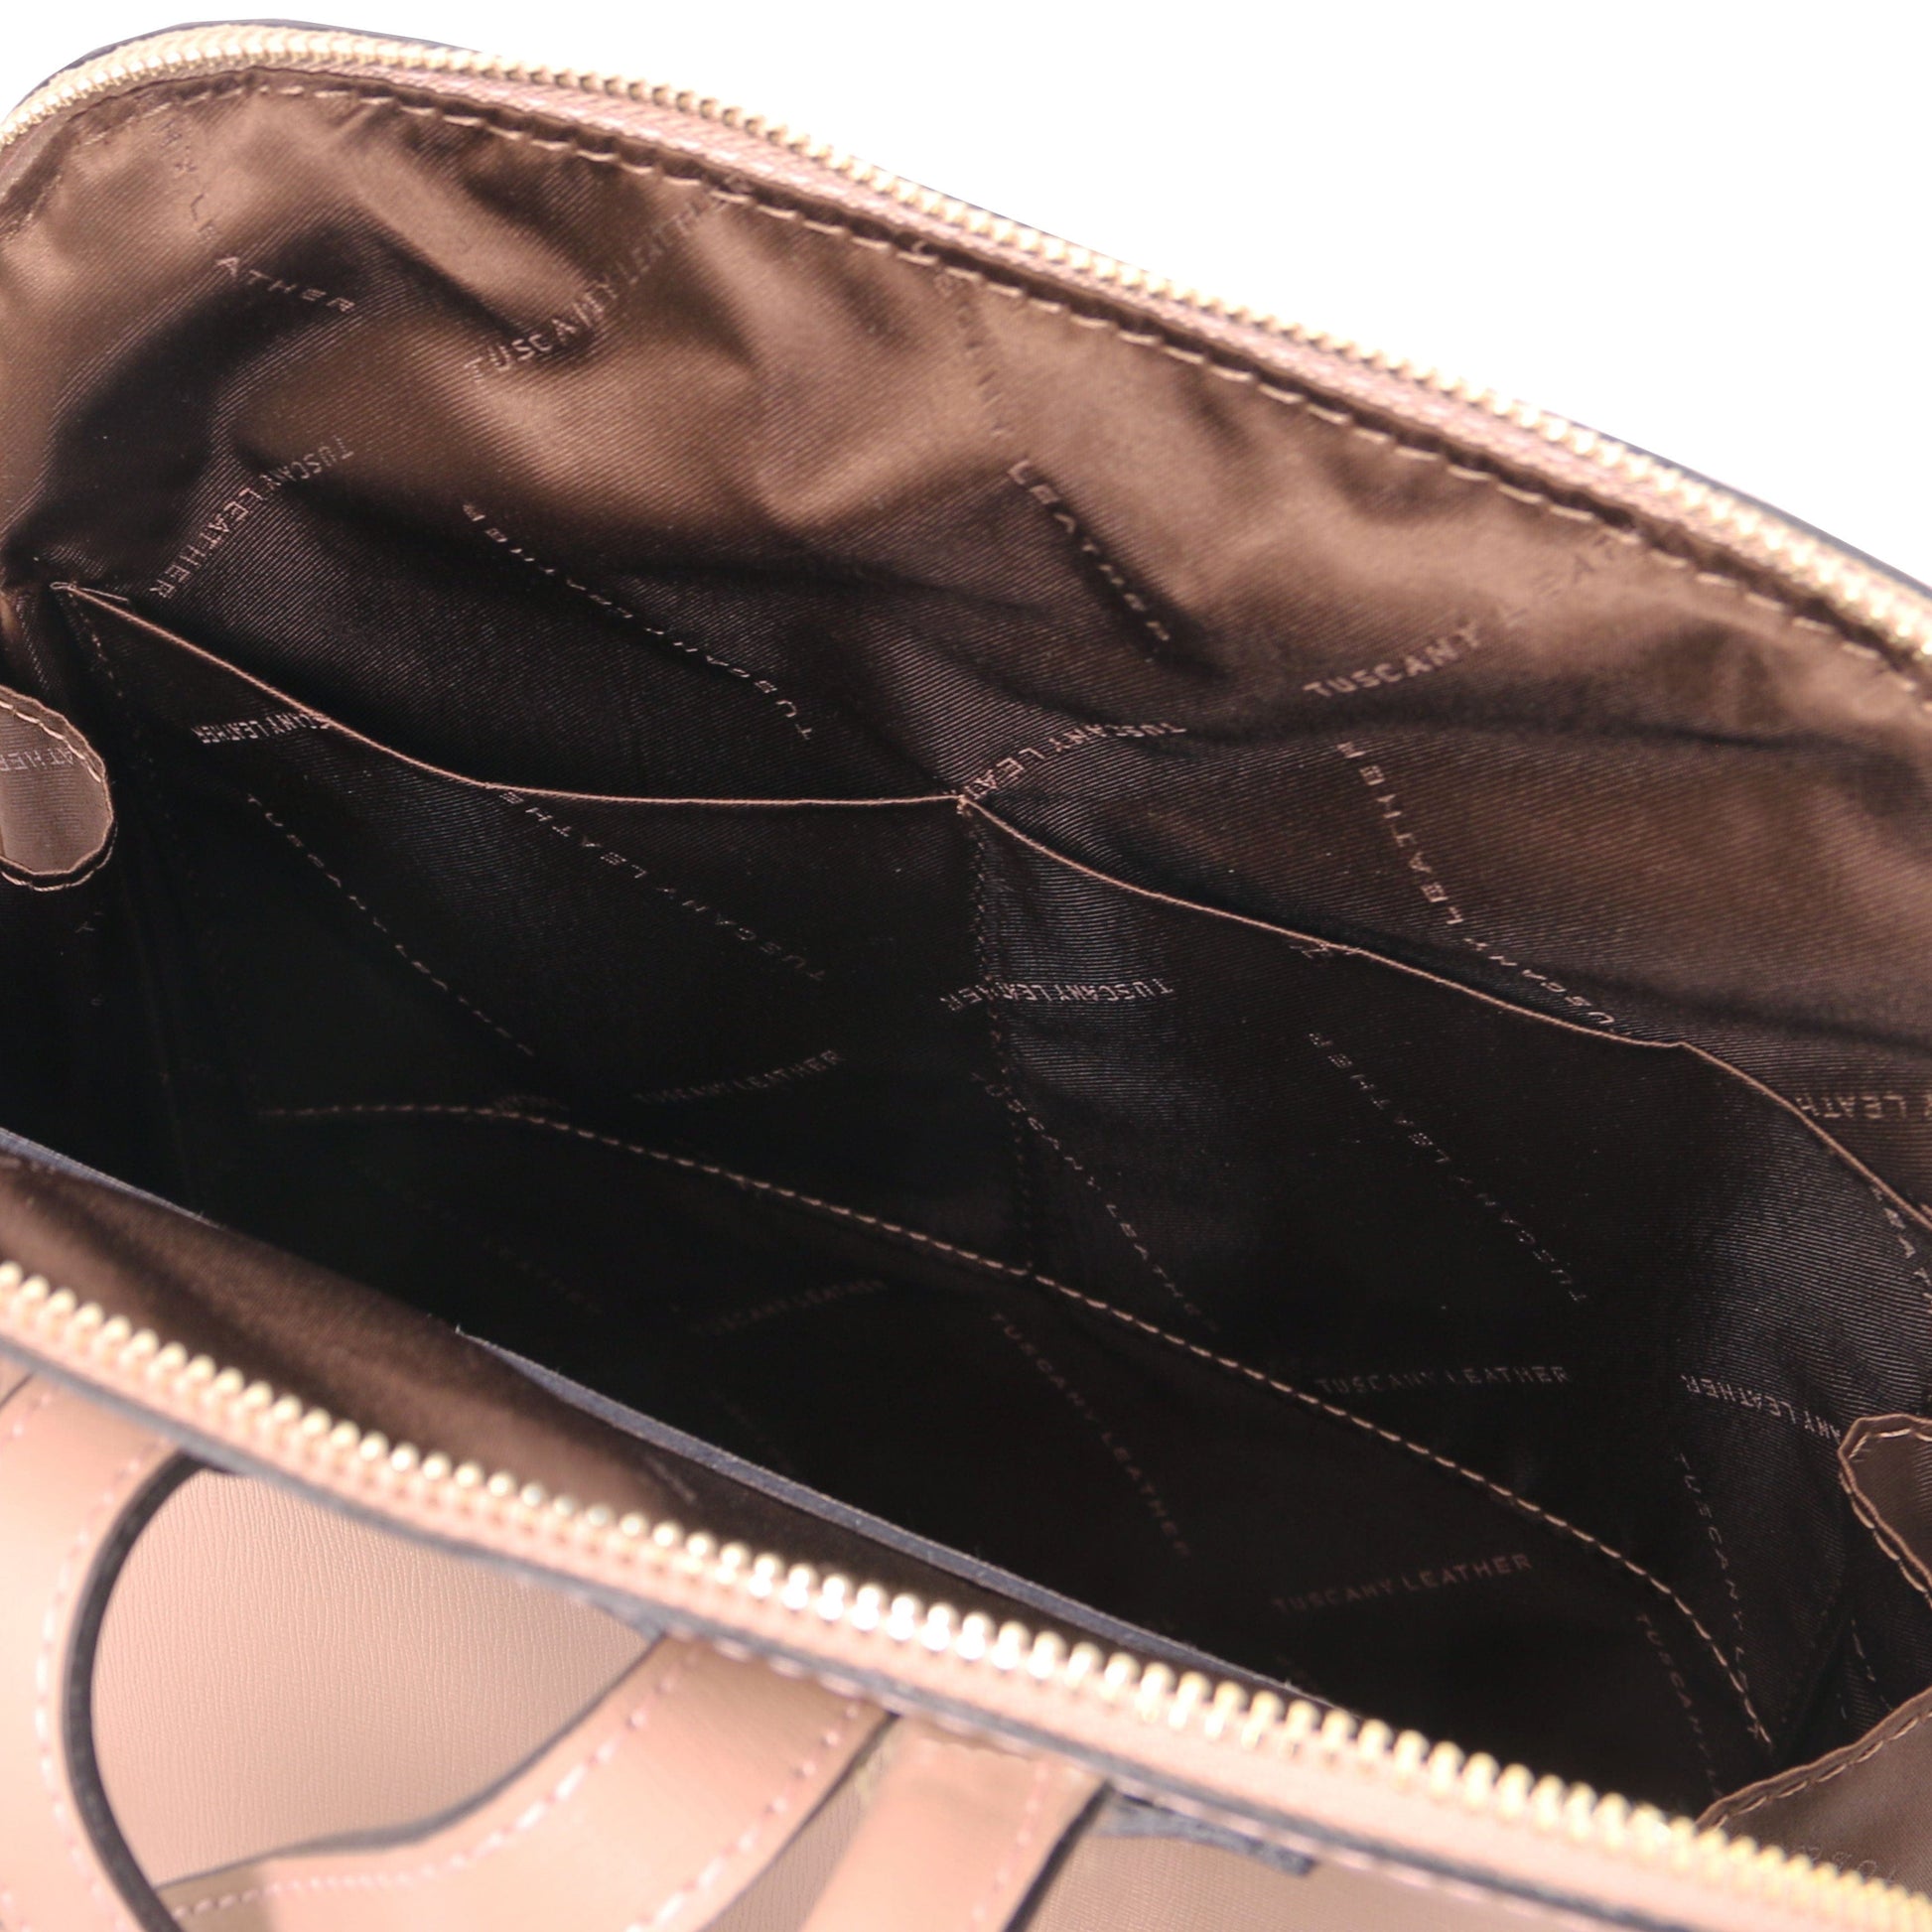 TL Bag - Saffiano leather backpack for women | TL141631 - Premium Leather backpacks for women - Shop now at San Rocco Italia